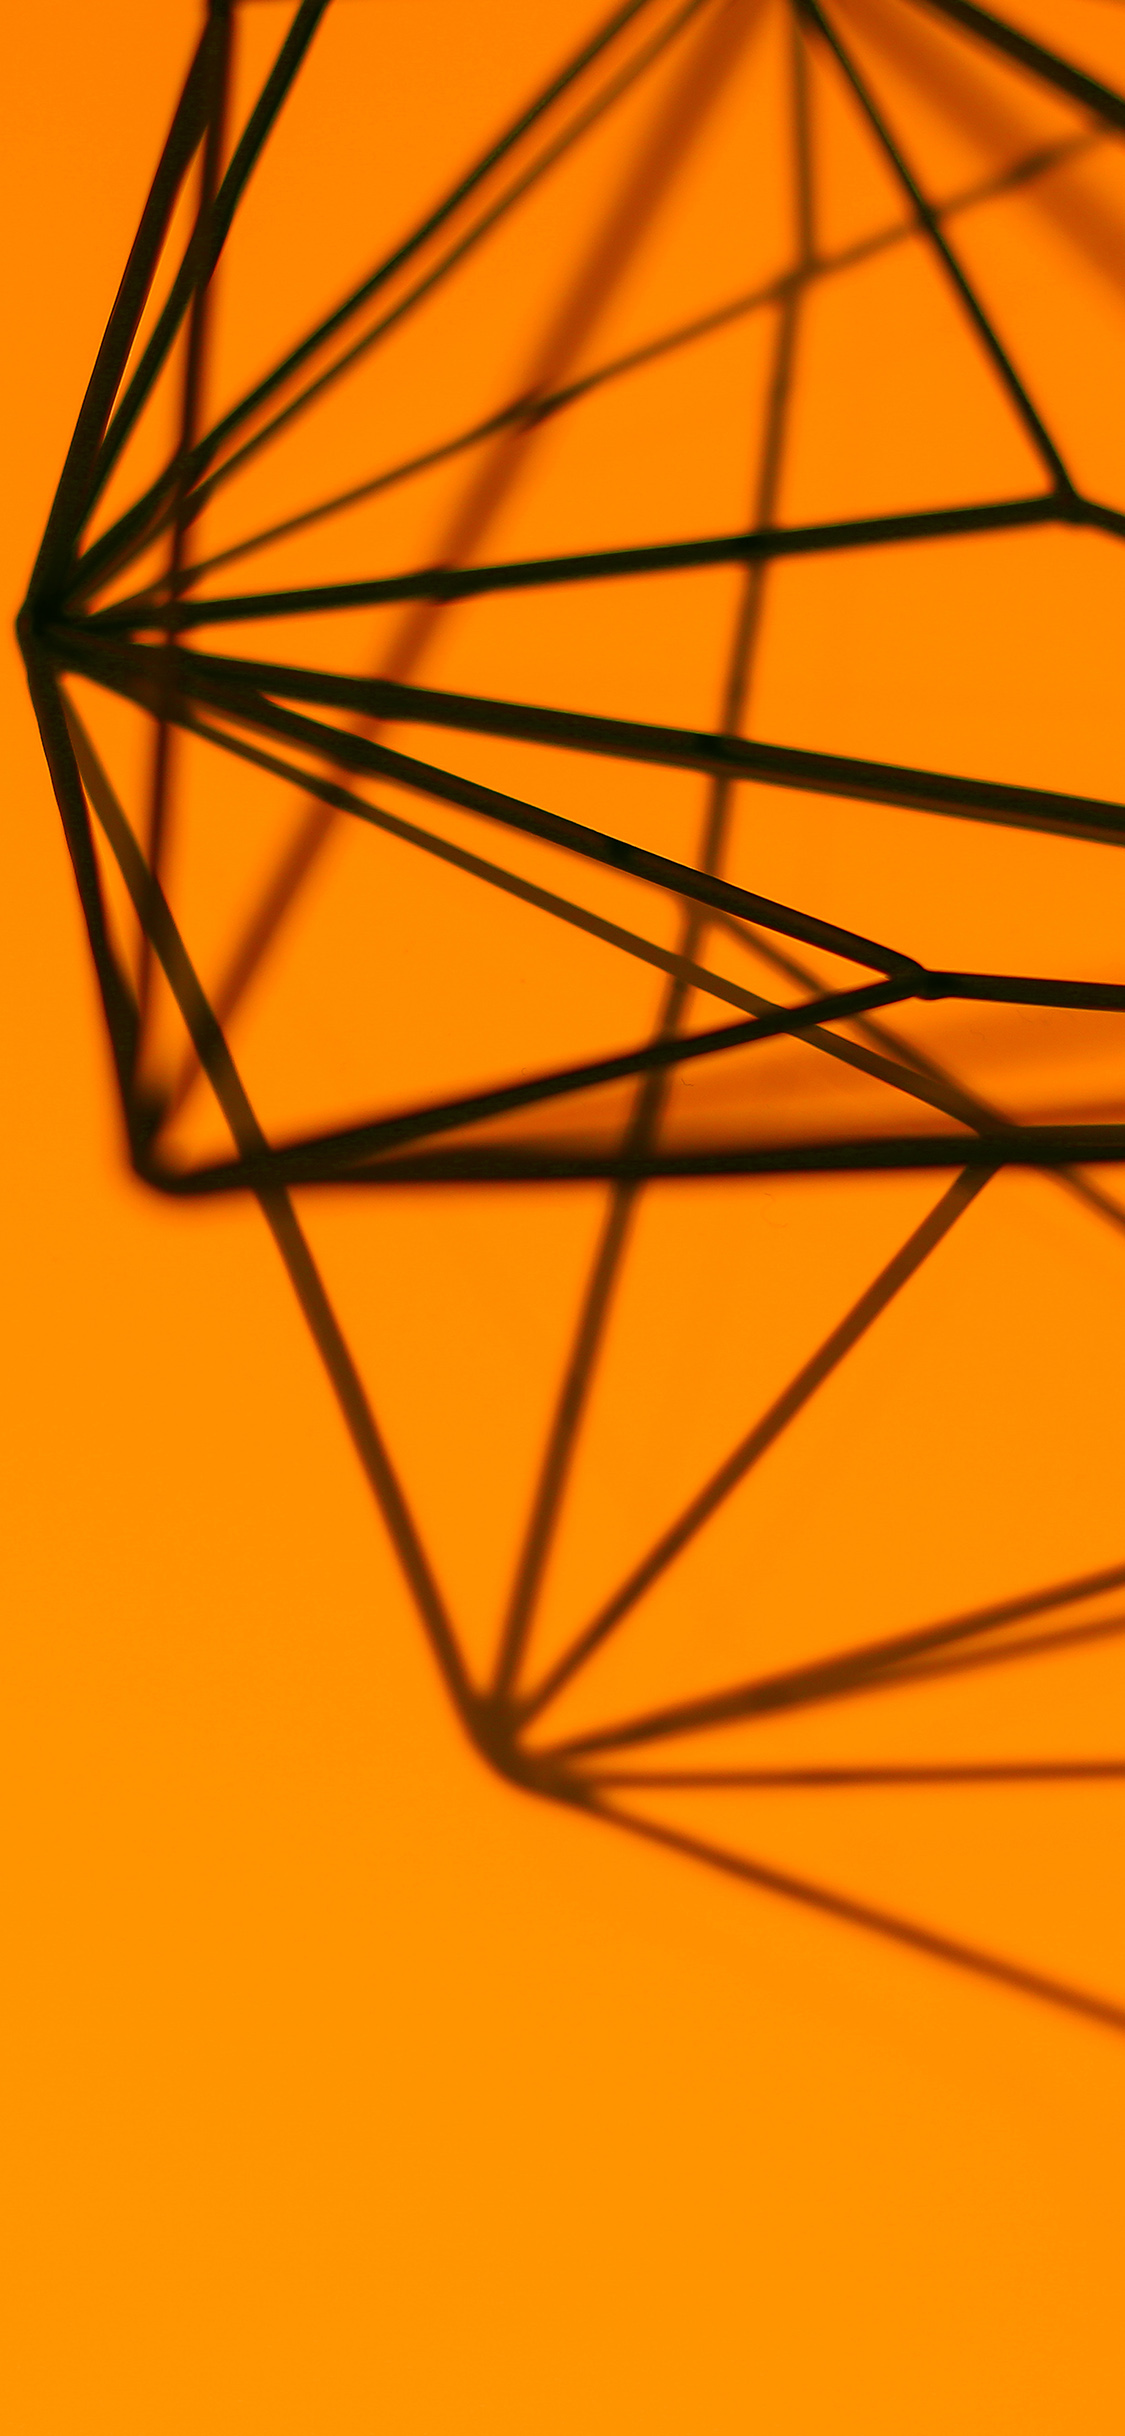 iPhone X wallpaper. simple design deco orange pattern